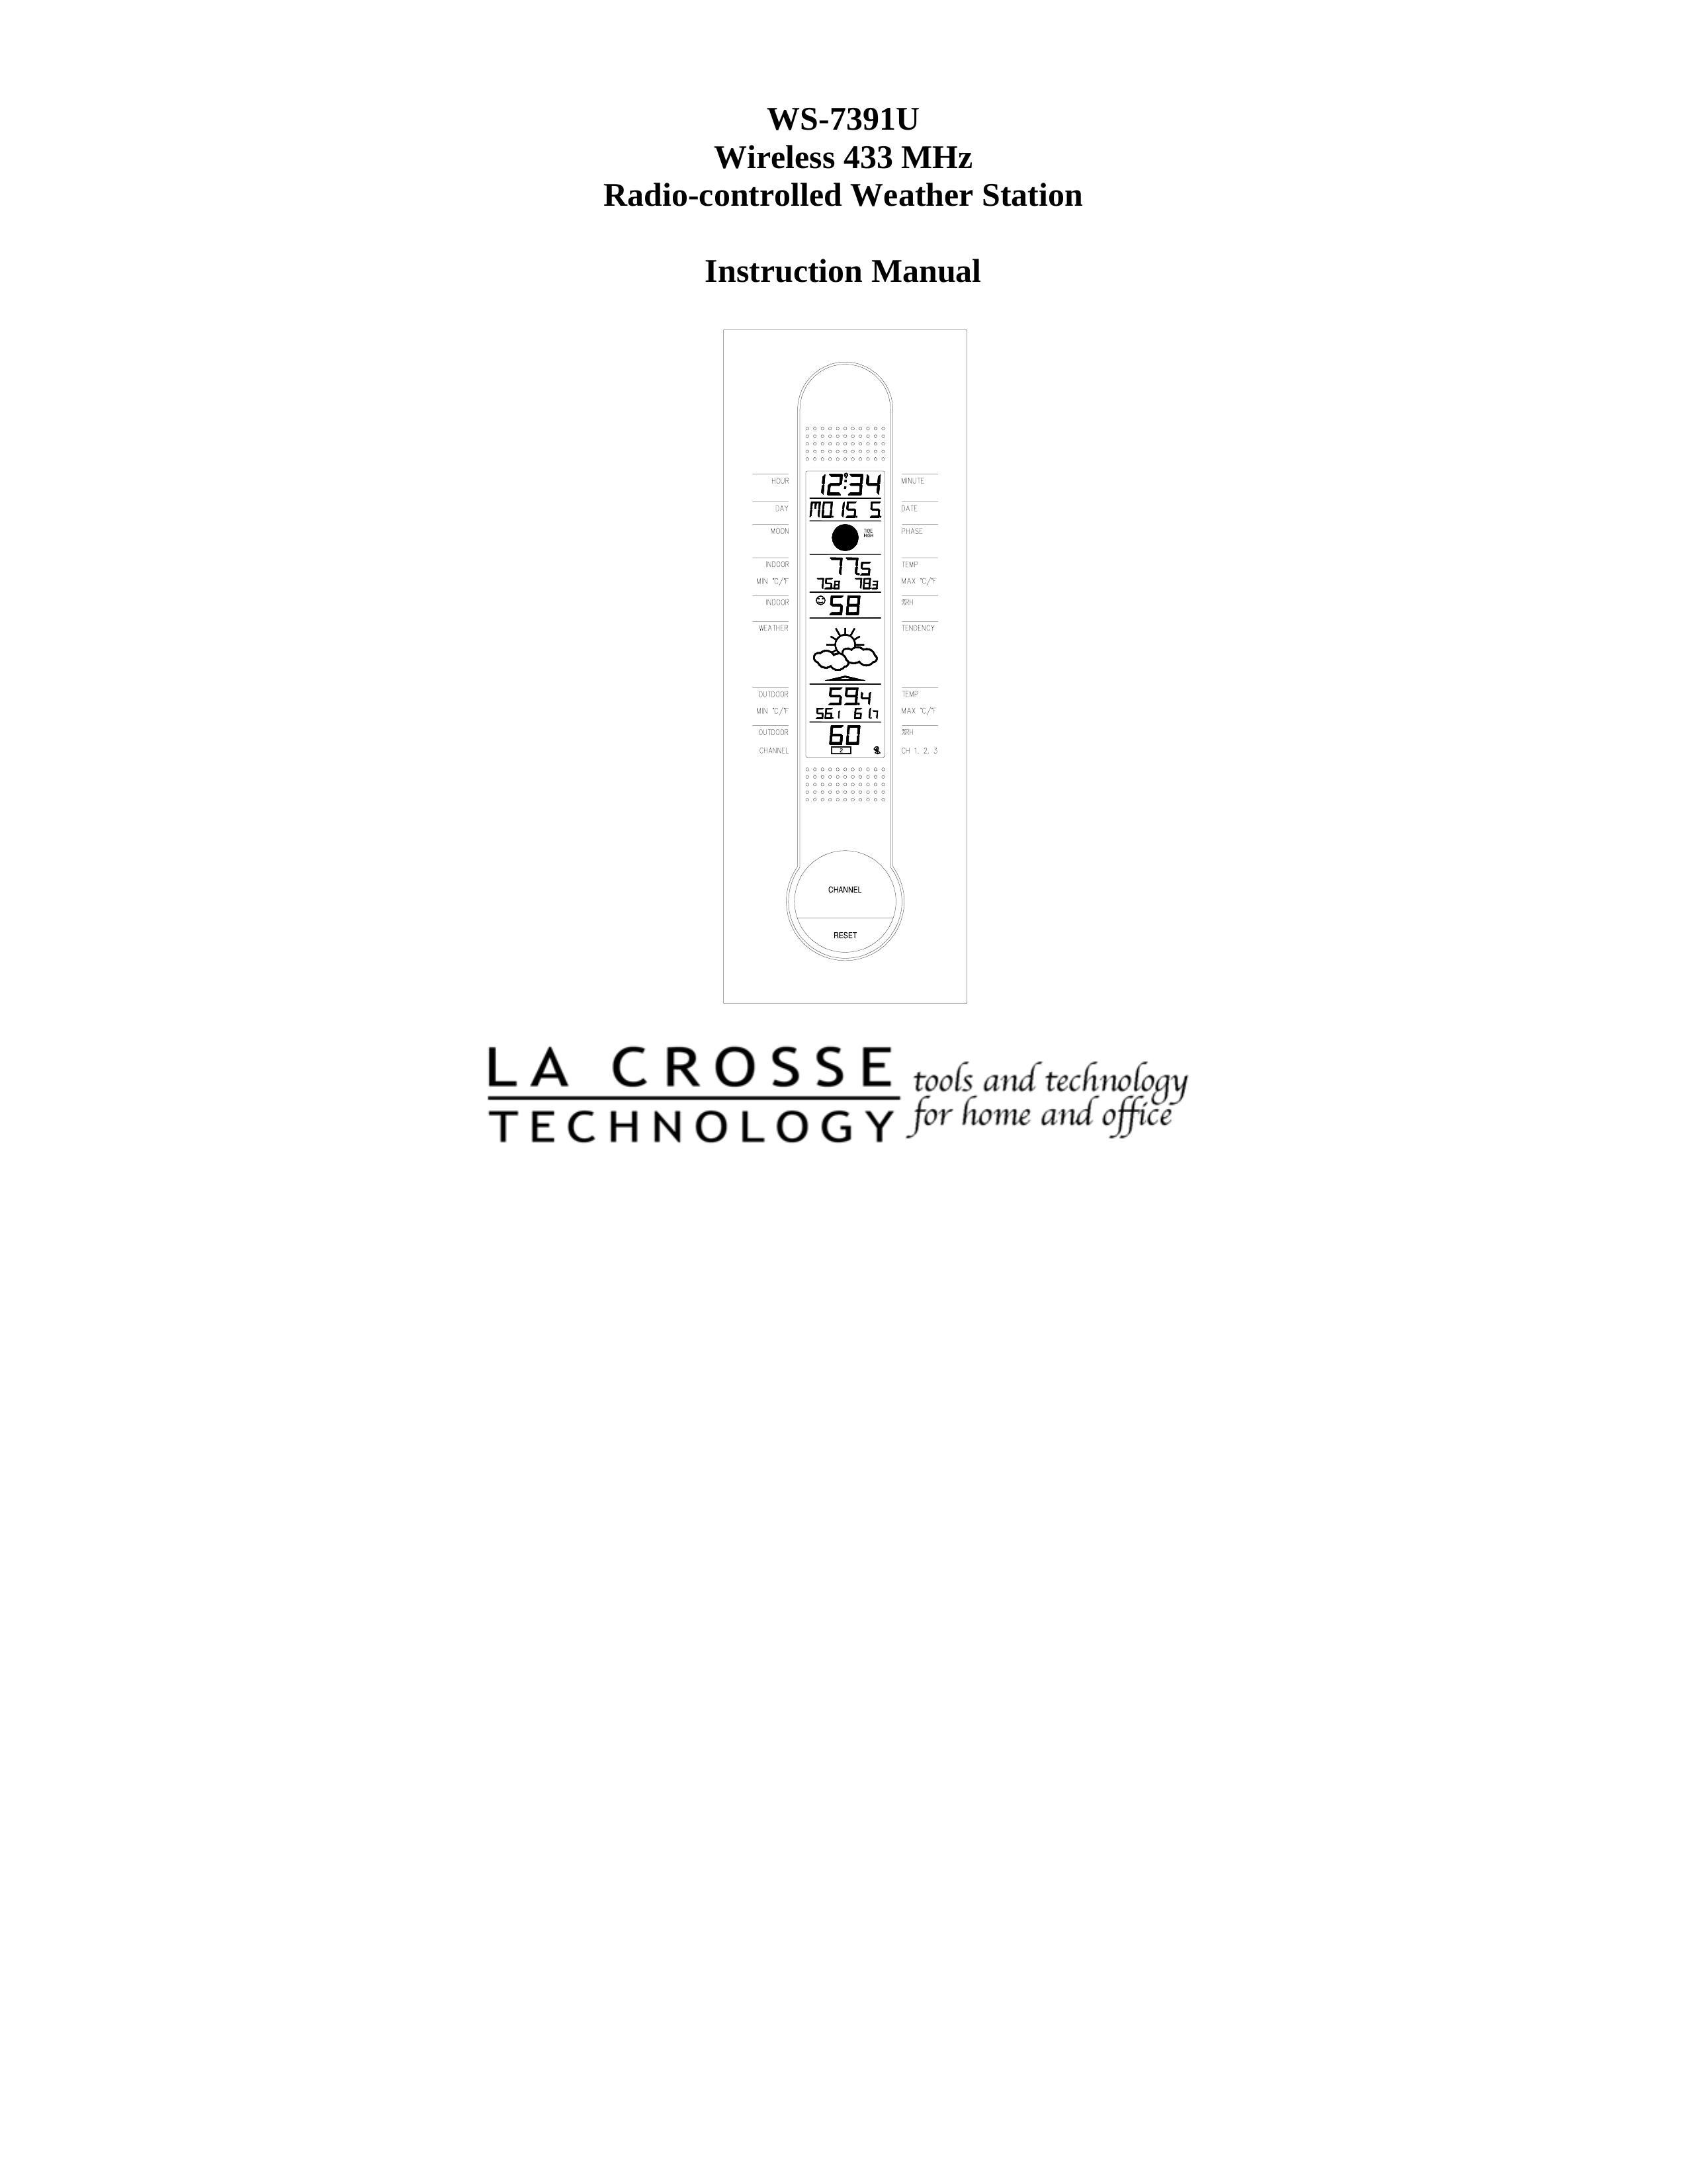 La Crosse Technology WS-7391U Weather Radio User Manual